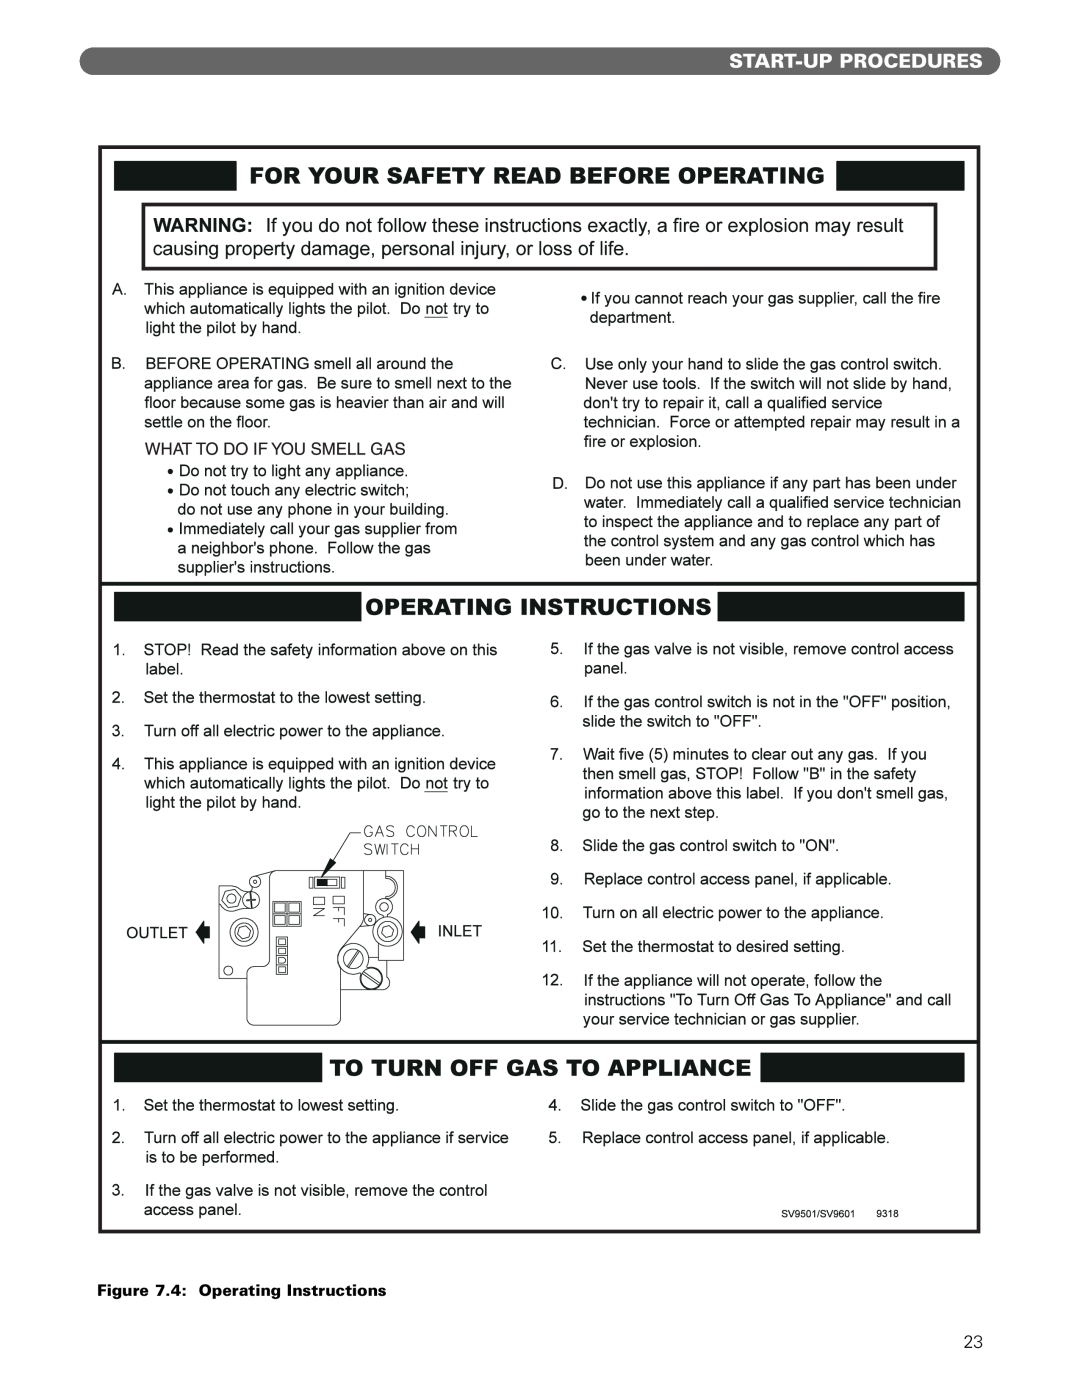 PB Heat MI/MIH series manual Start-Upprocedures, 4 Operating Instructions 